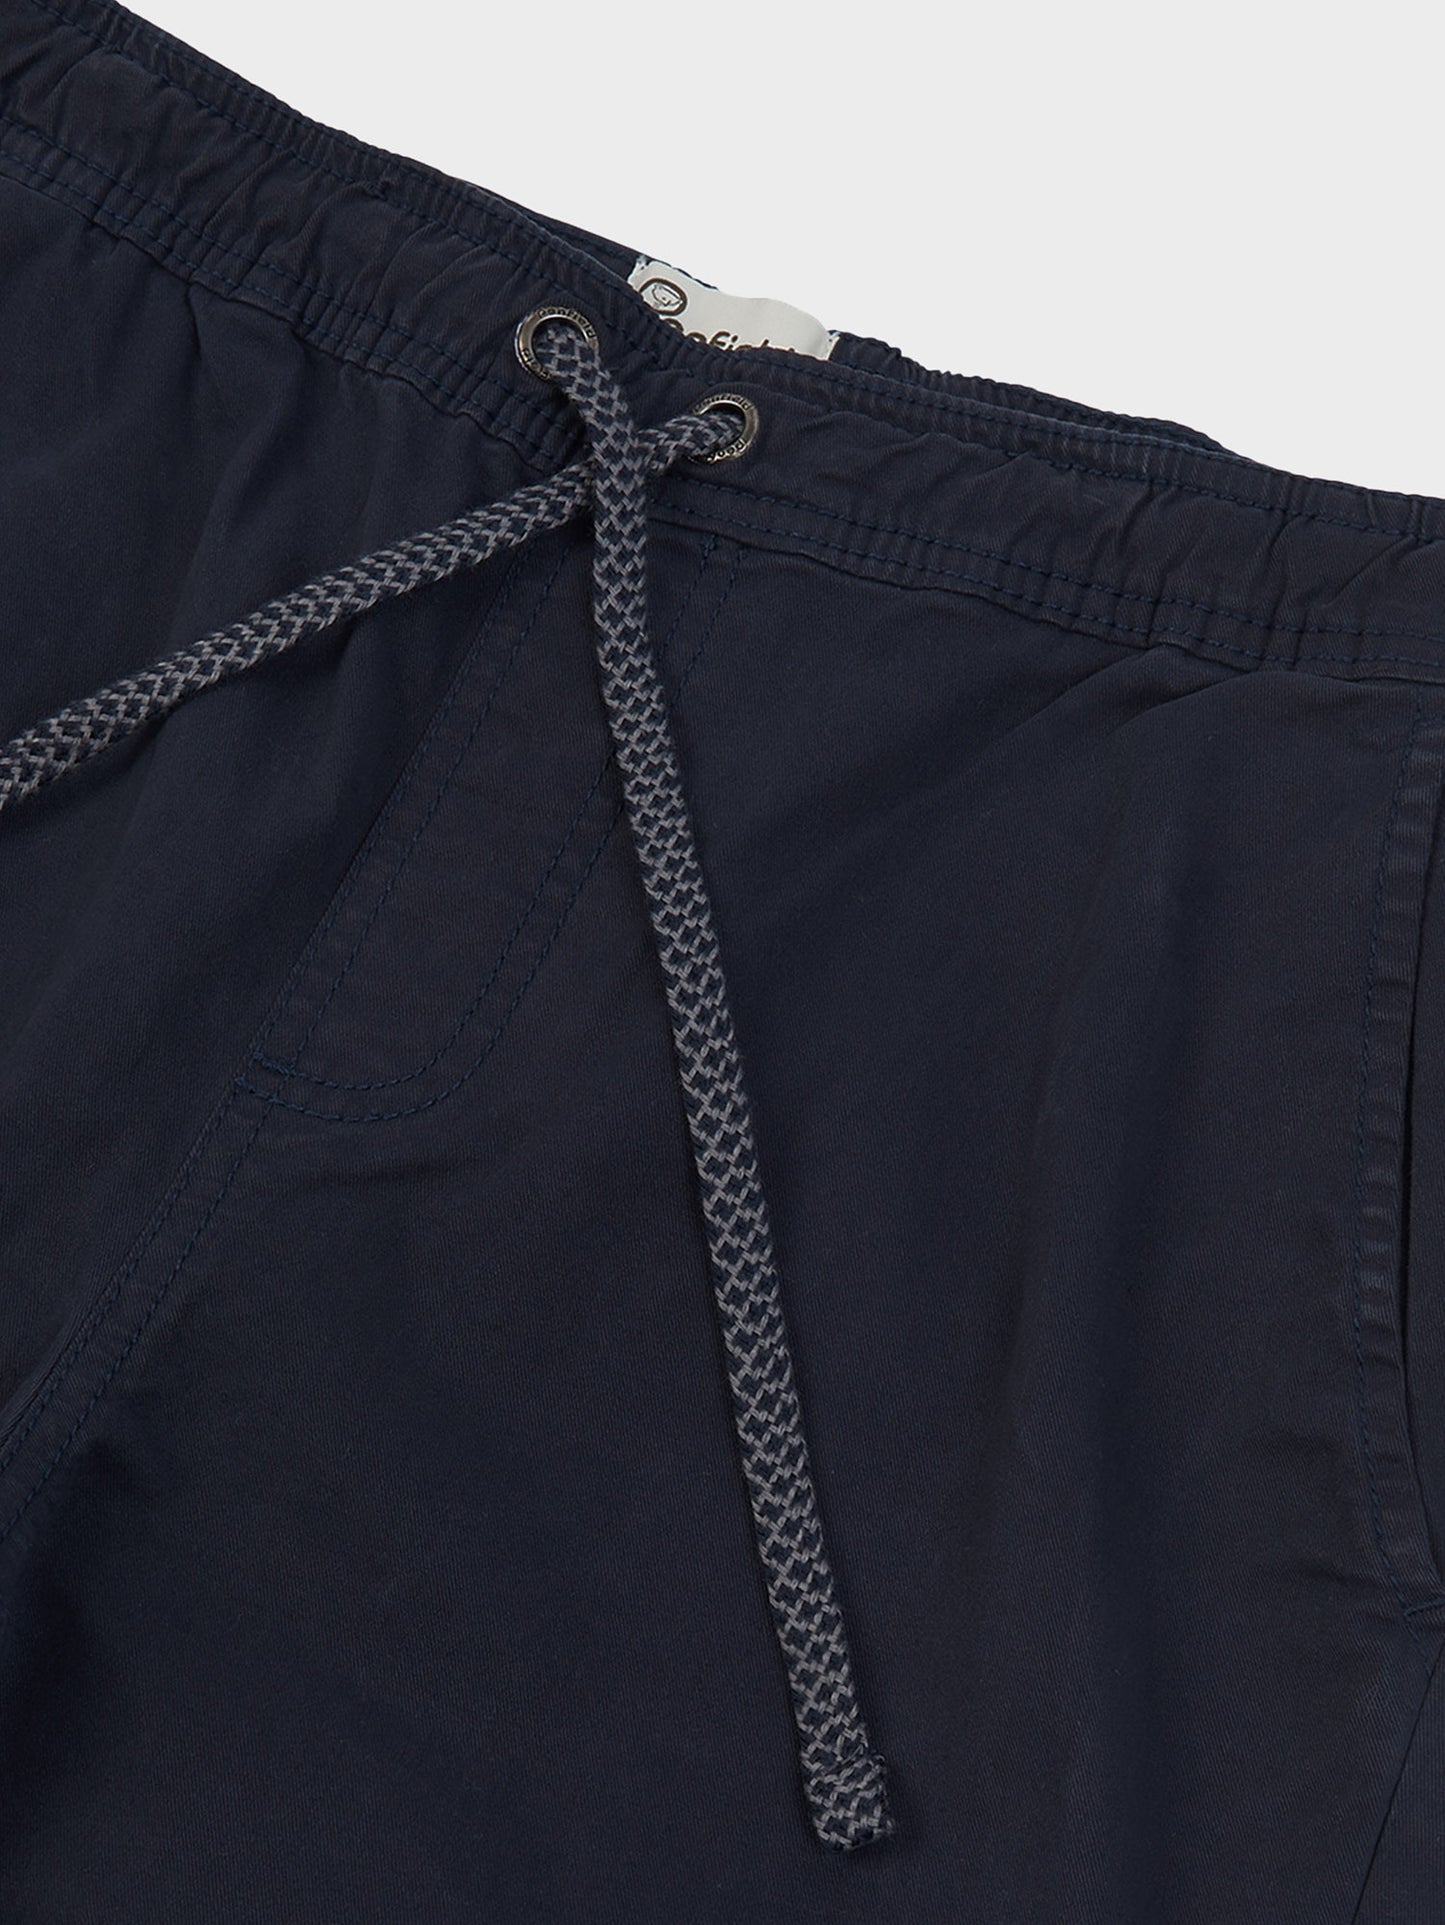 Hudson Script Elasticated Waist Pants in Navy Blue